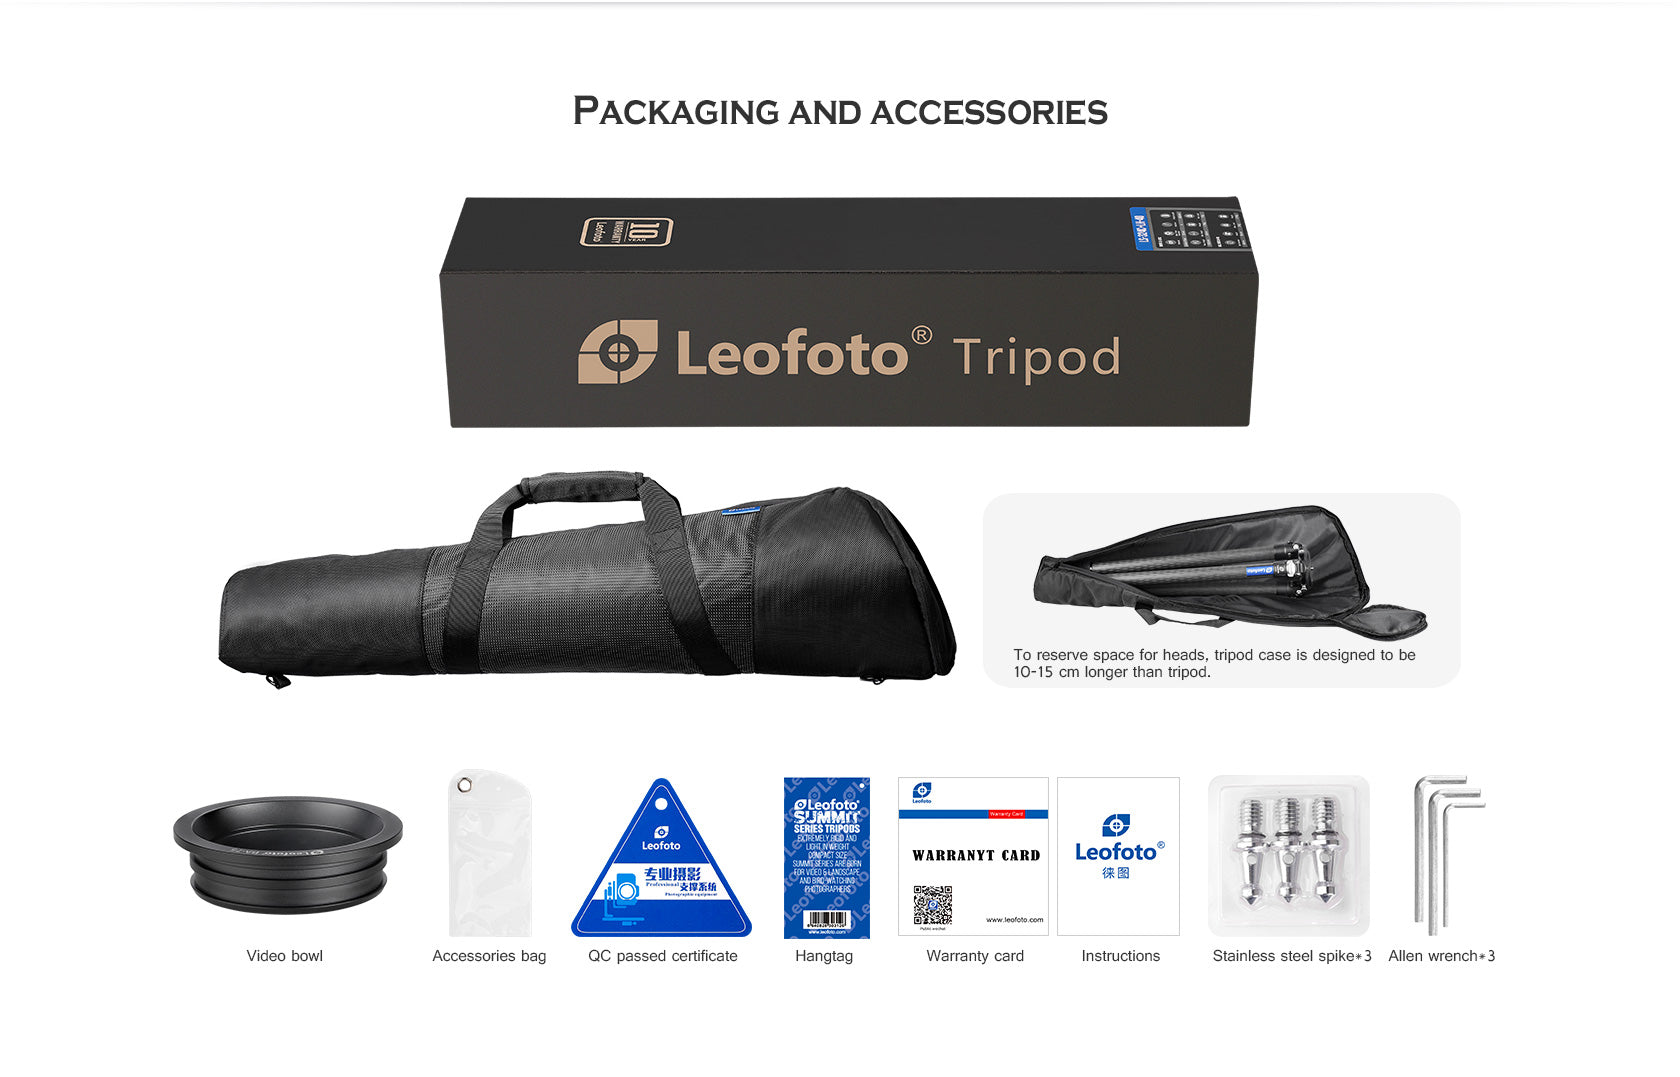 Leofoto LM-324CL(Long) Tripod with 75mm Video Bowl+Platform and Bag